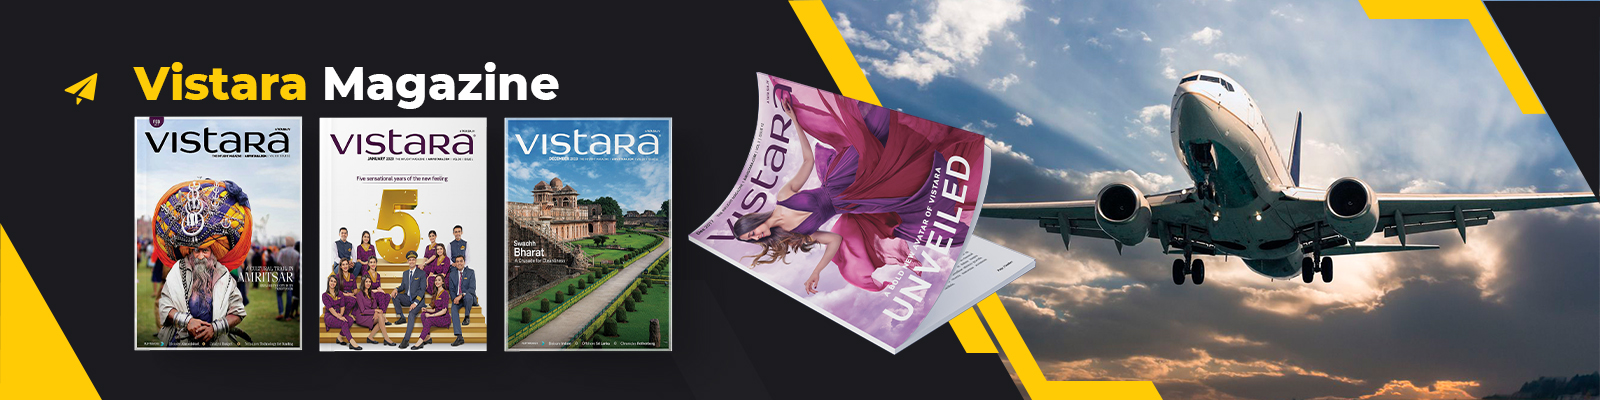 Vistara In-Flight Magazine Advertisement